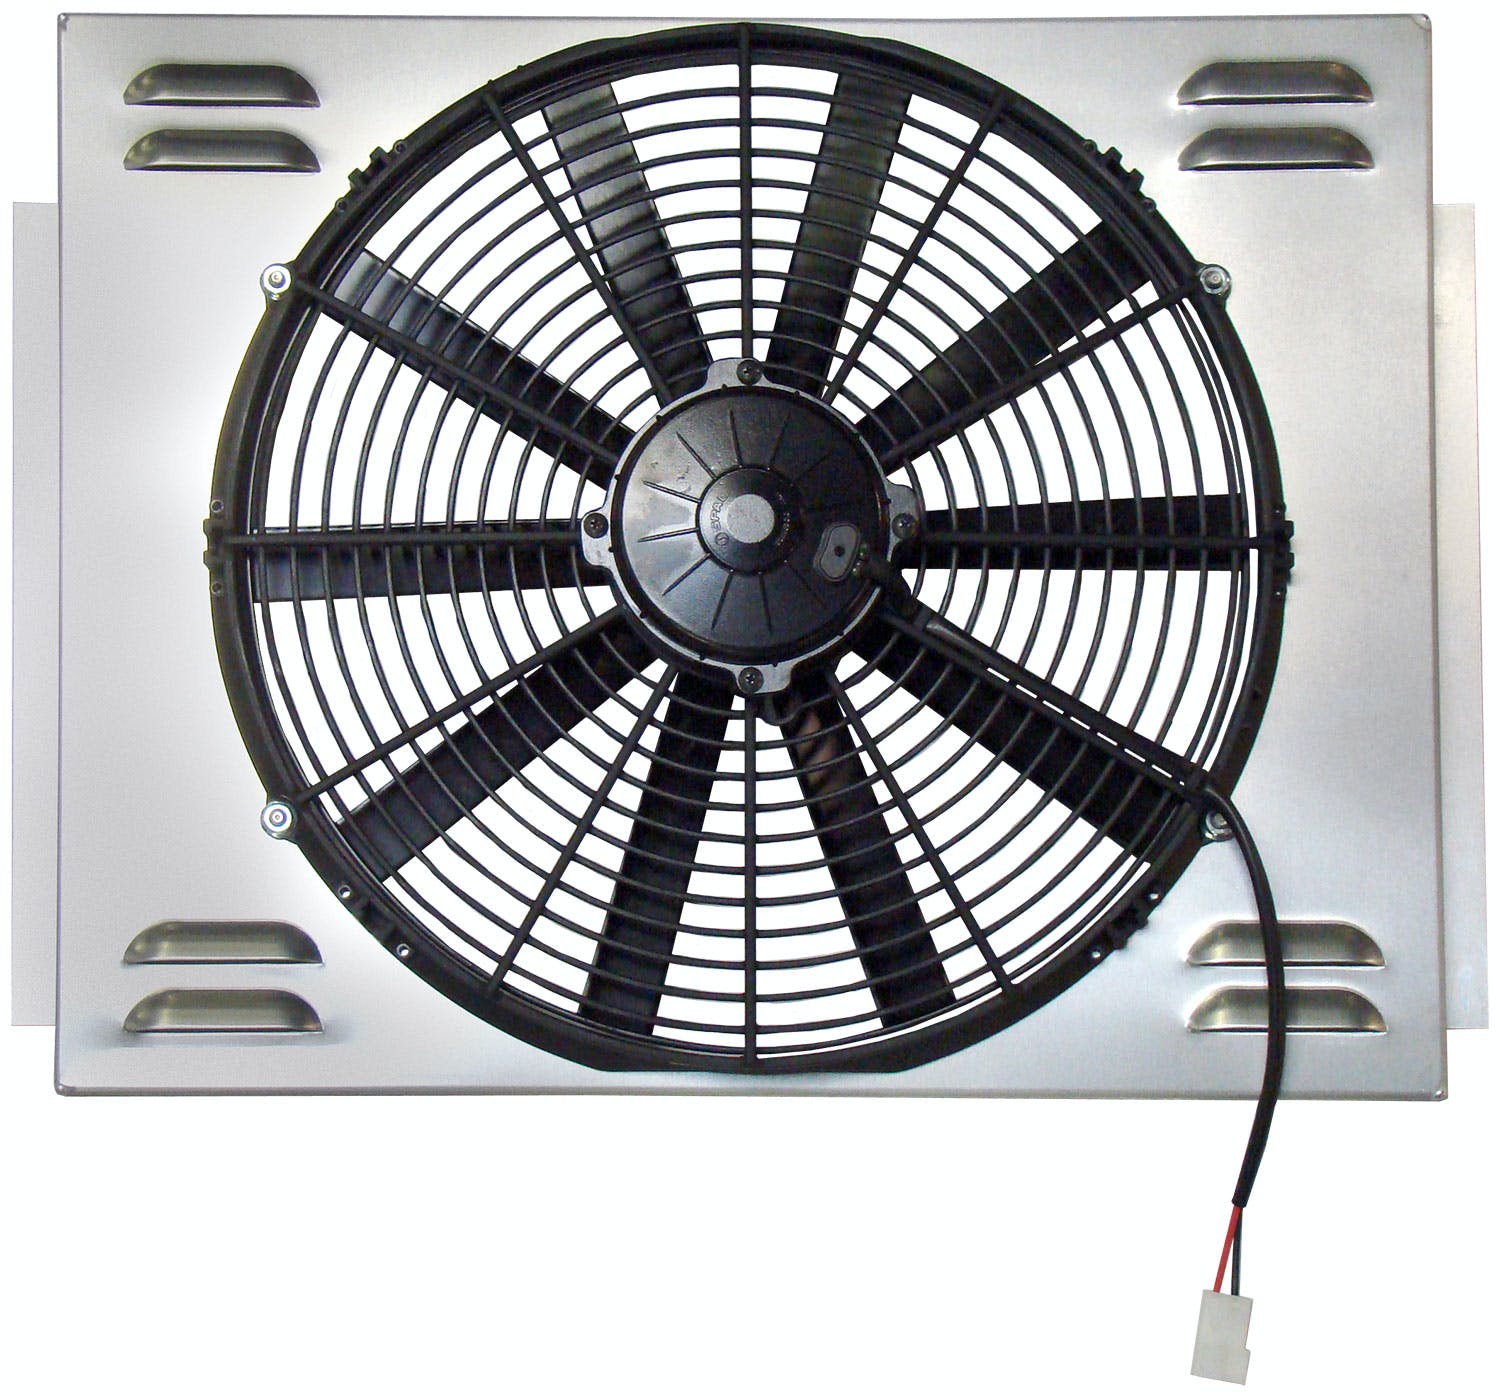 Northern Radiator Z40097 Single 16 Inch Electric Fan